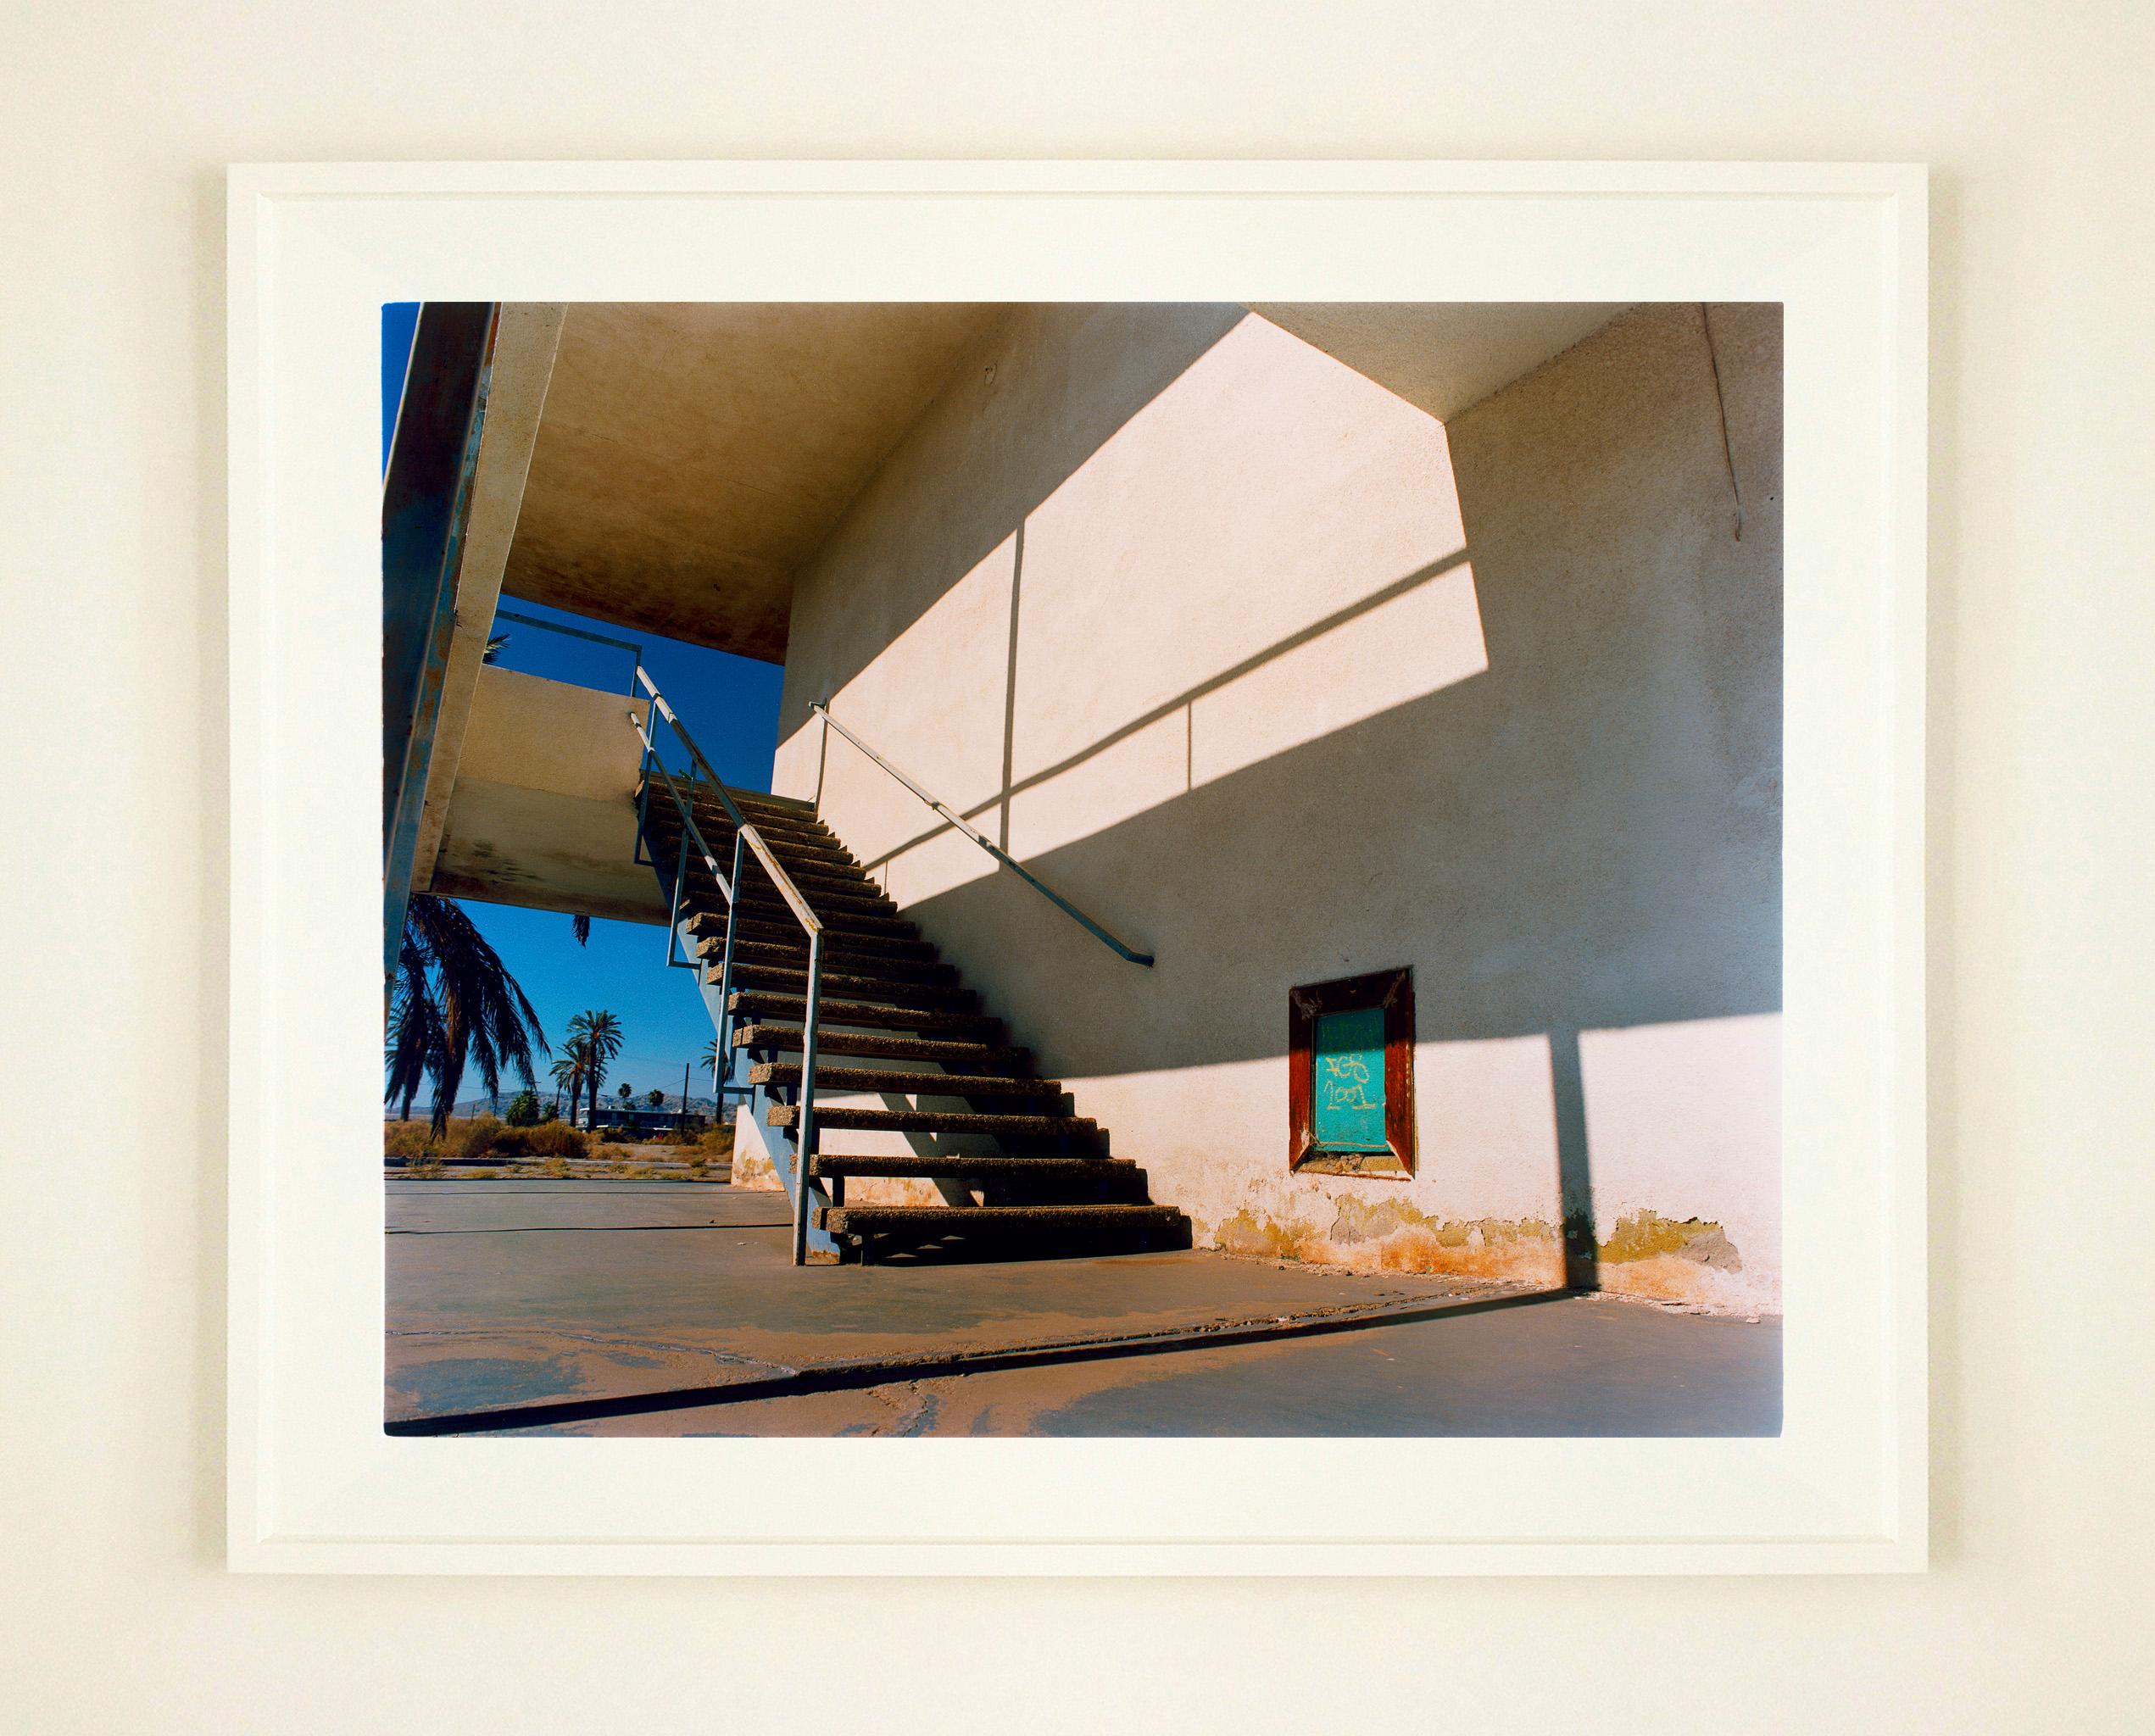 North Shore Motel Steps, Salton Sea, California - Architectural color photo - Contemporary Photograph by Richard Heeps